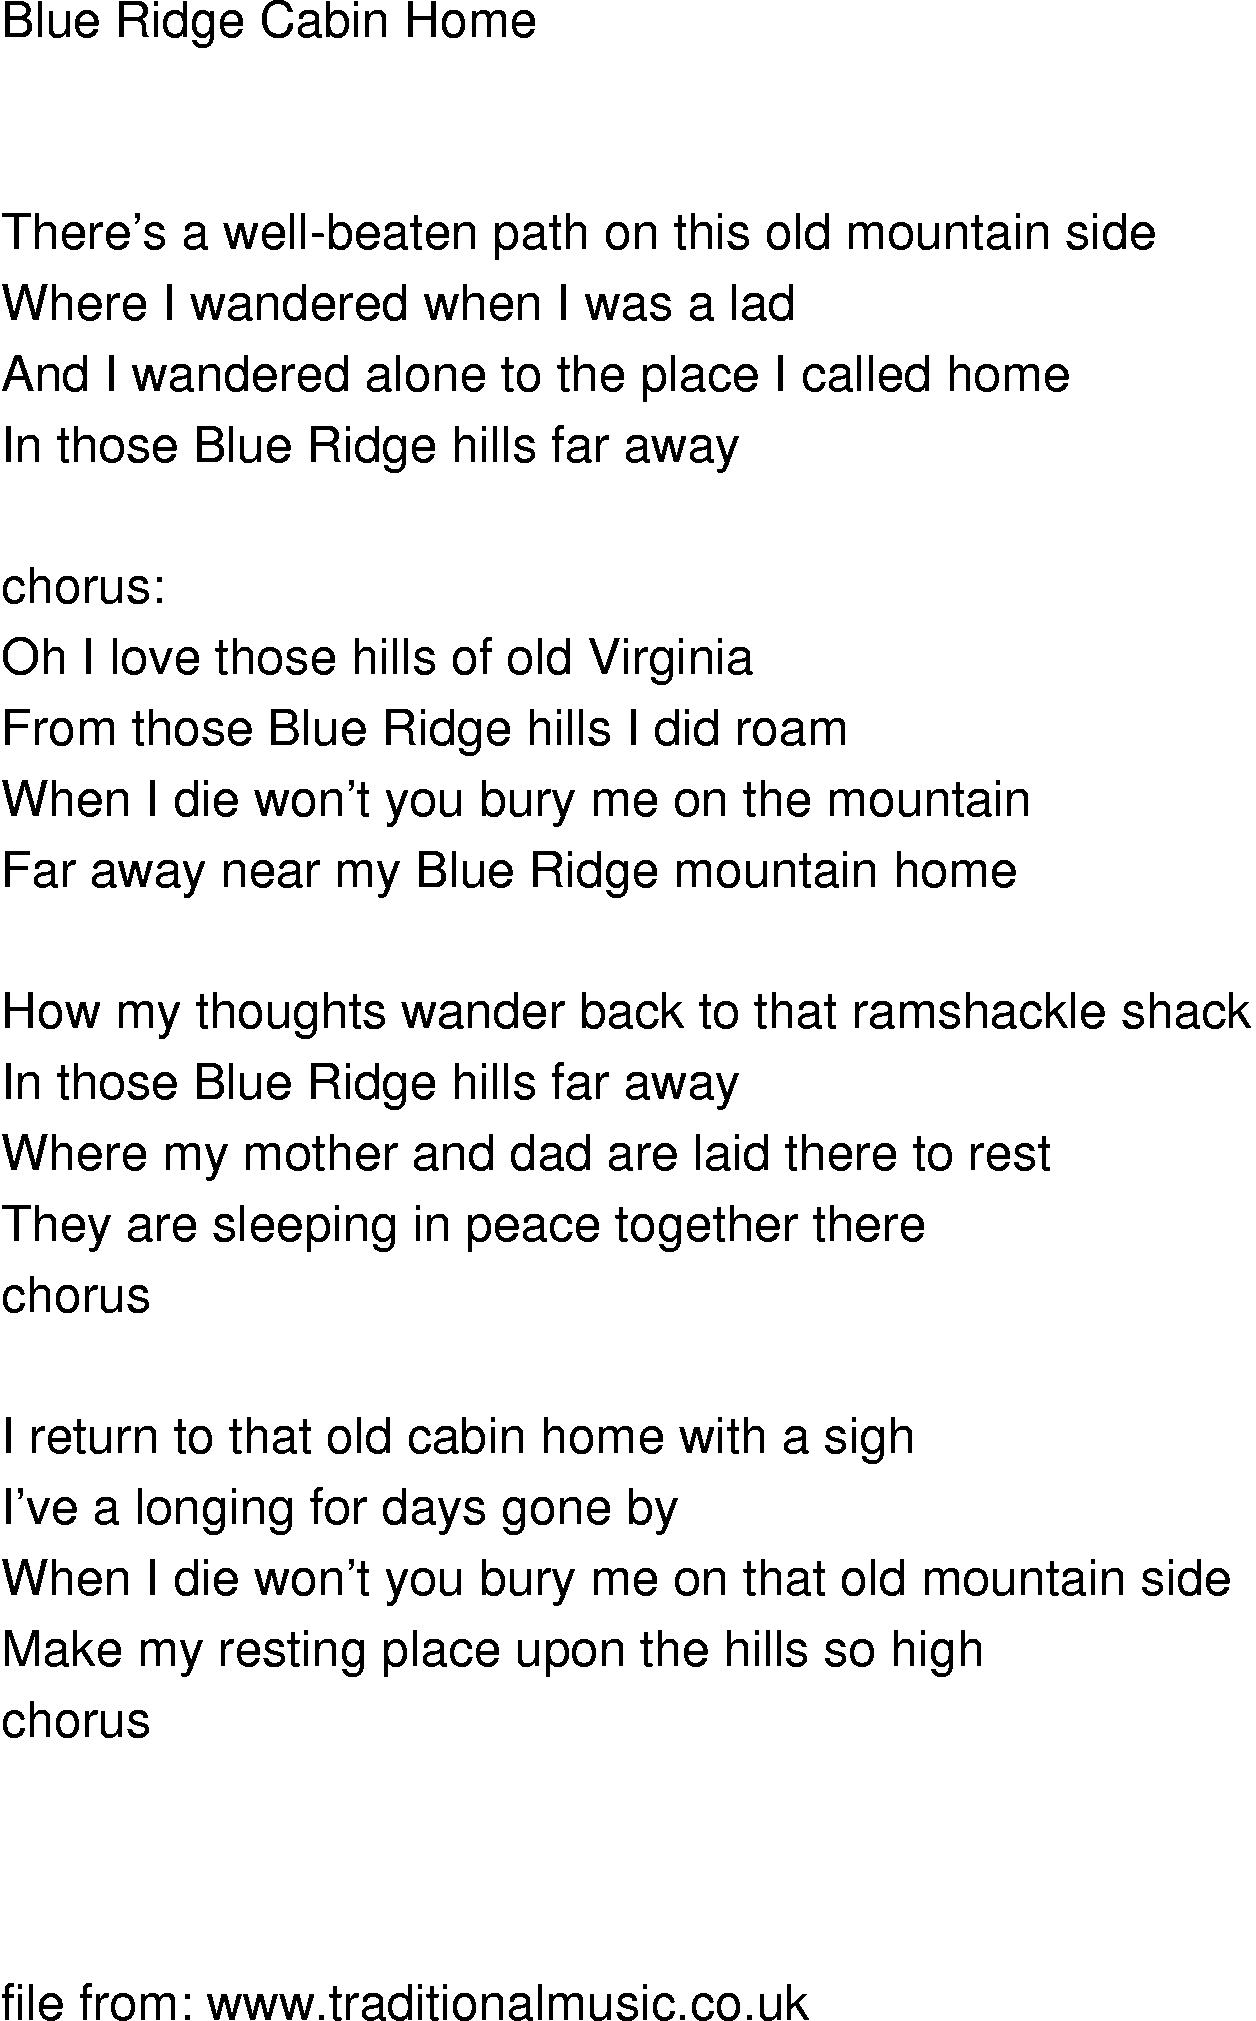 Old-Time Lyrics - Cabin Home